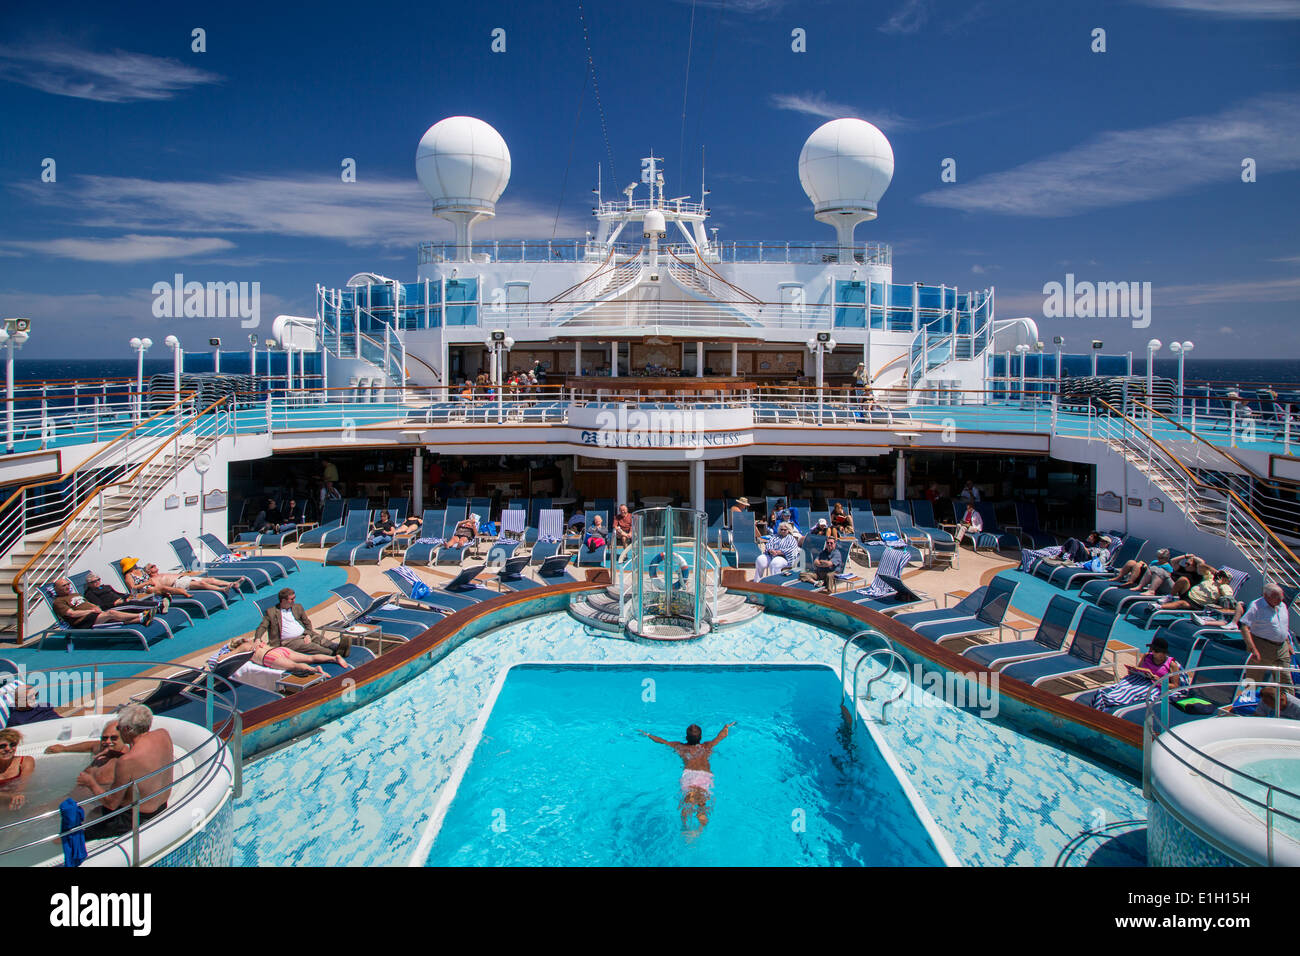 Mitte Schiff Pool an Bord Emerald Princess Cruise Schiff auf See am Atlantischen Ozean Stockfoto